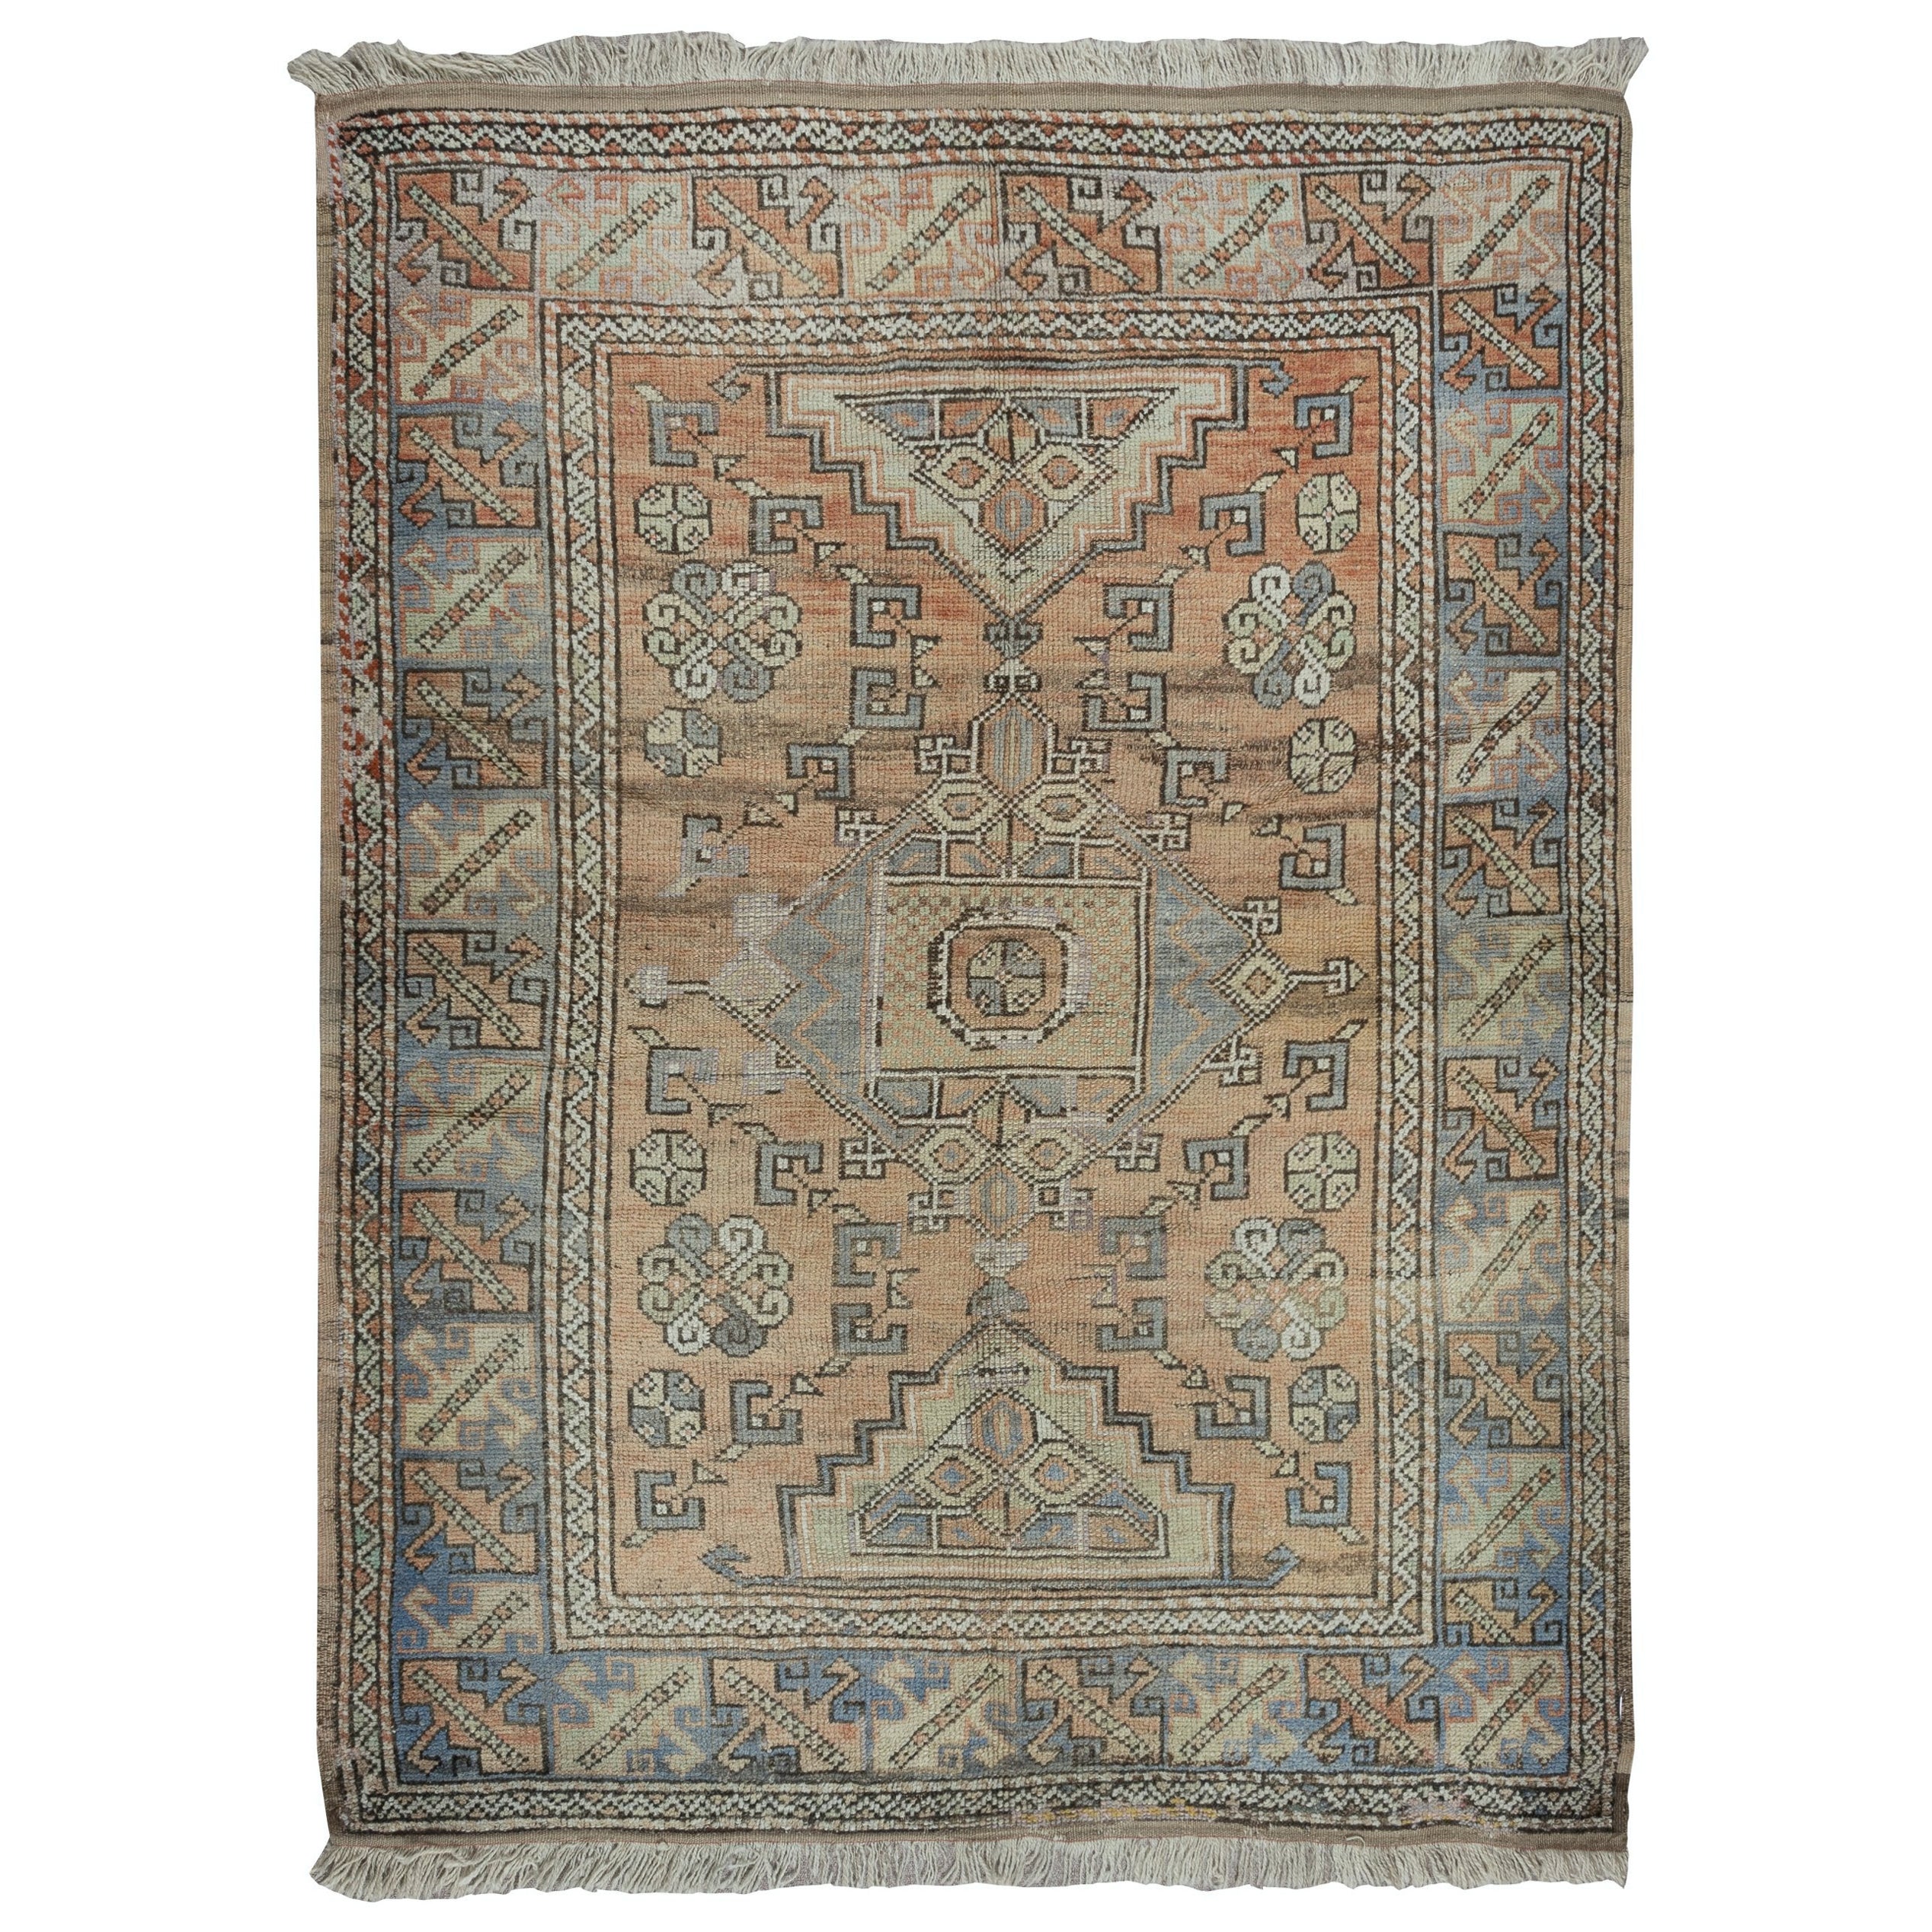 4.8x6 Ft Vintage Handmade Anatolian Wool Area Rug with Geometric Design